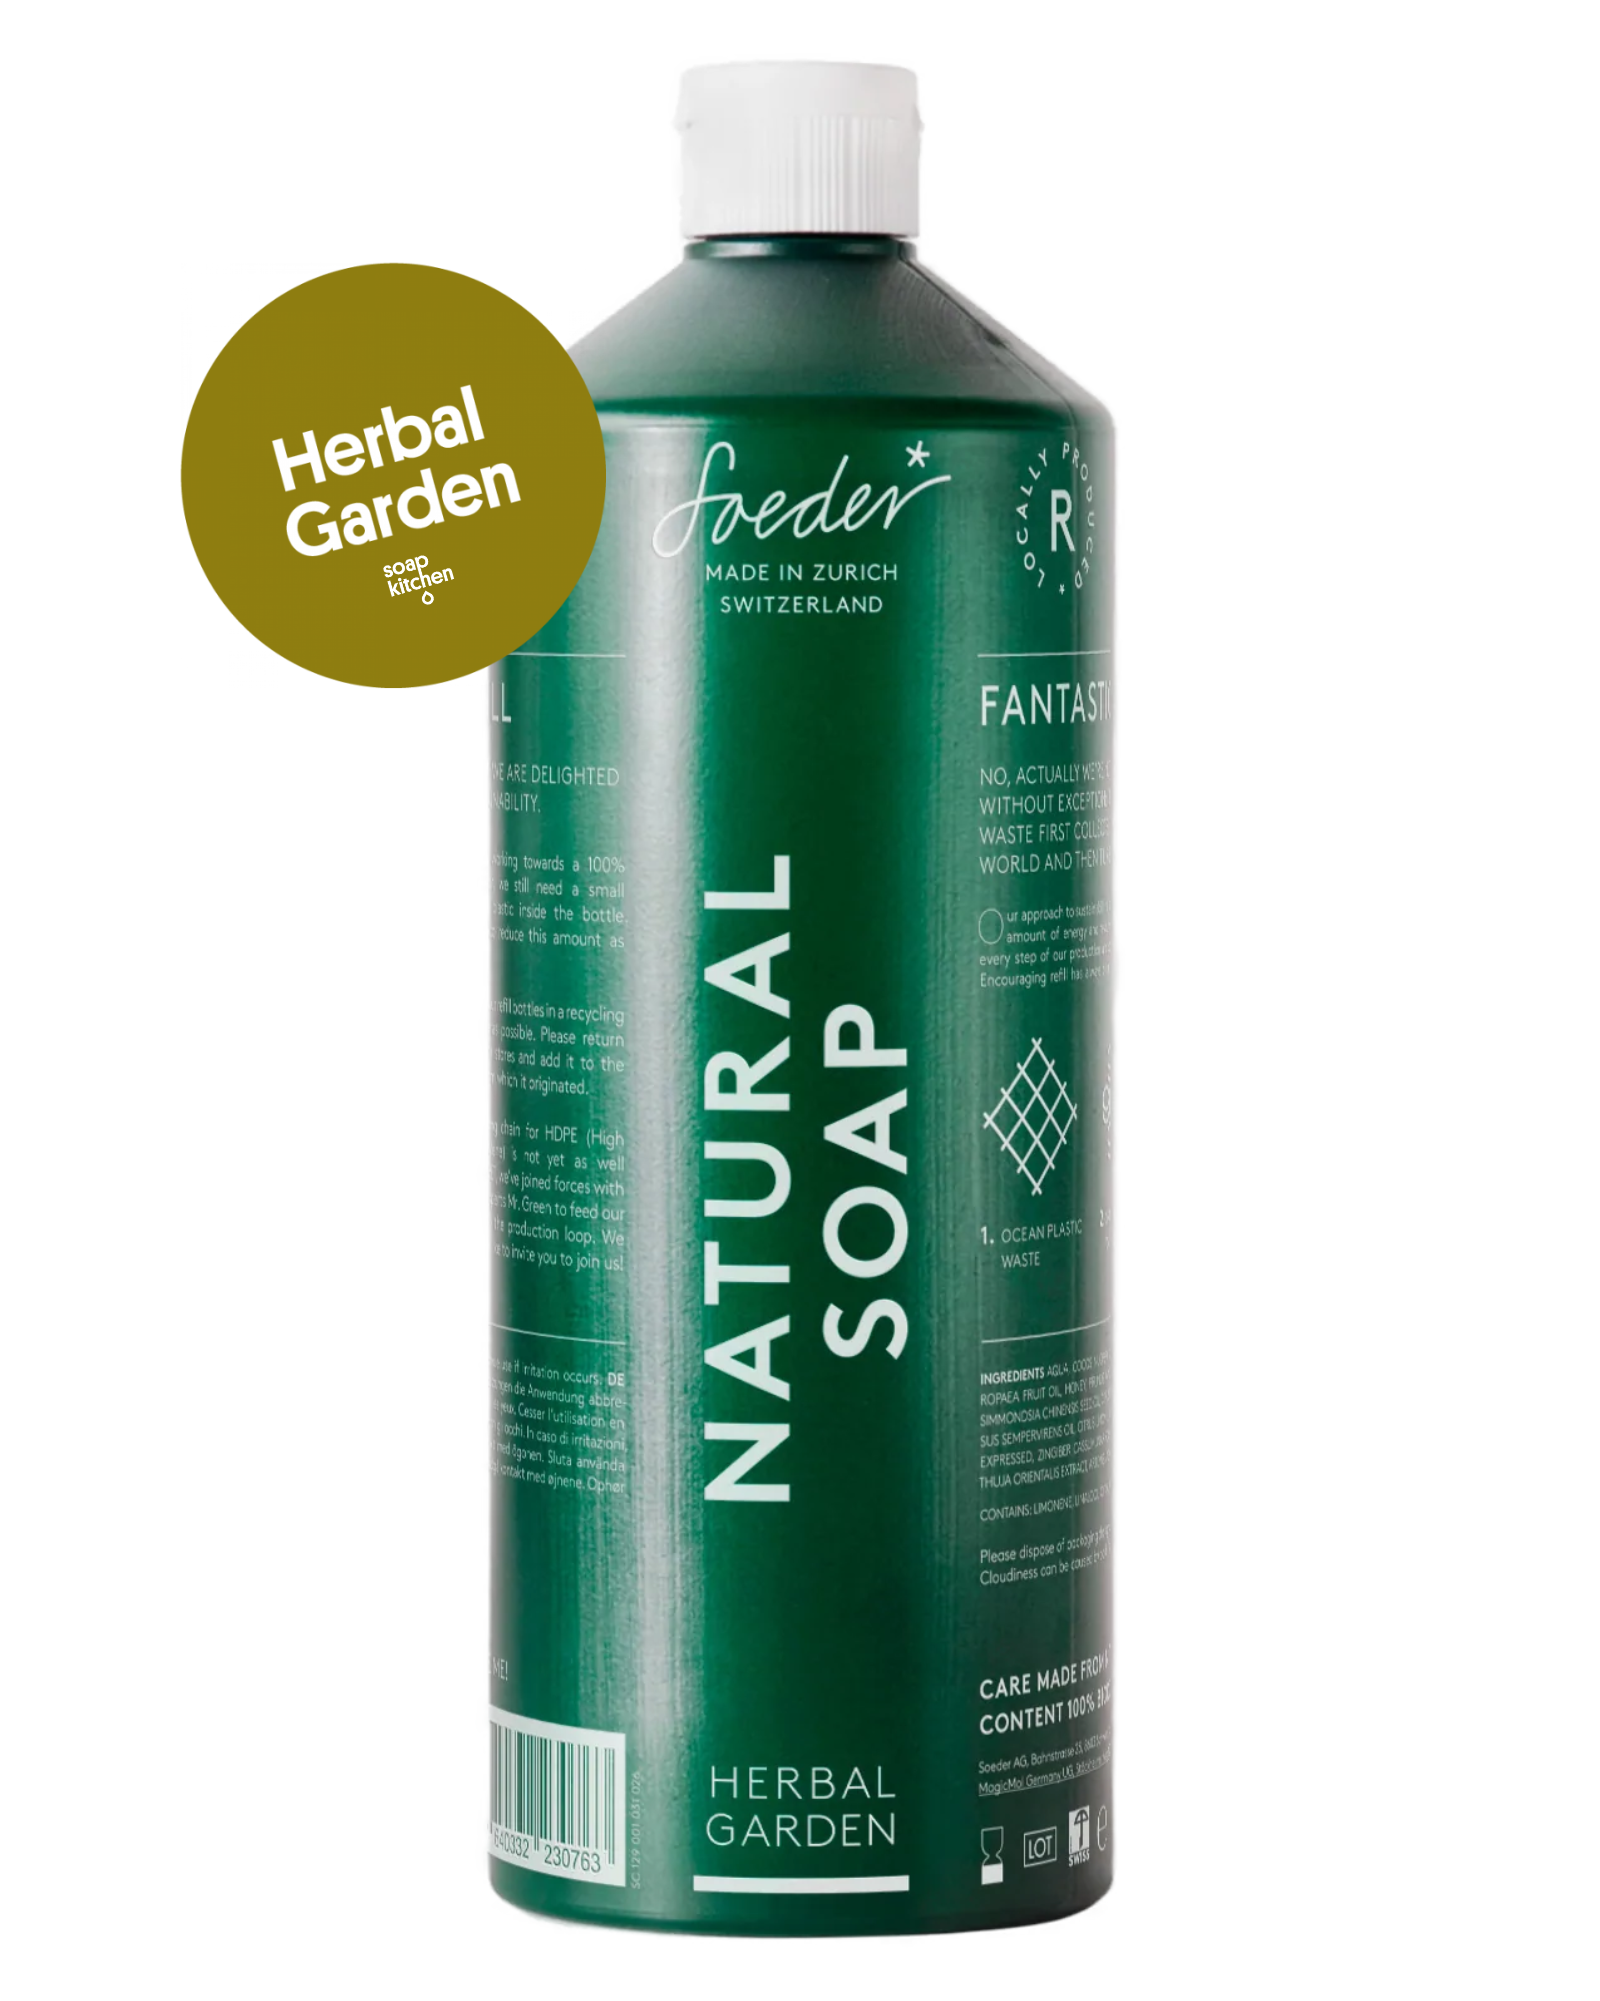 Herbal Garden Refill Bottle 1 Liter - Refill Naturseife von Soeder* 